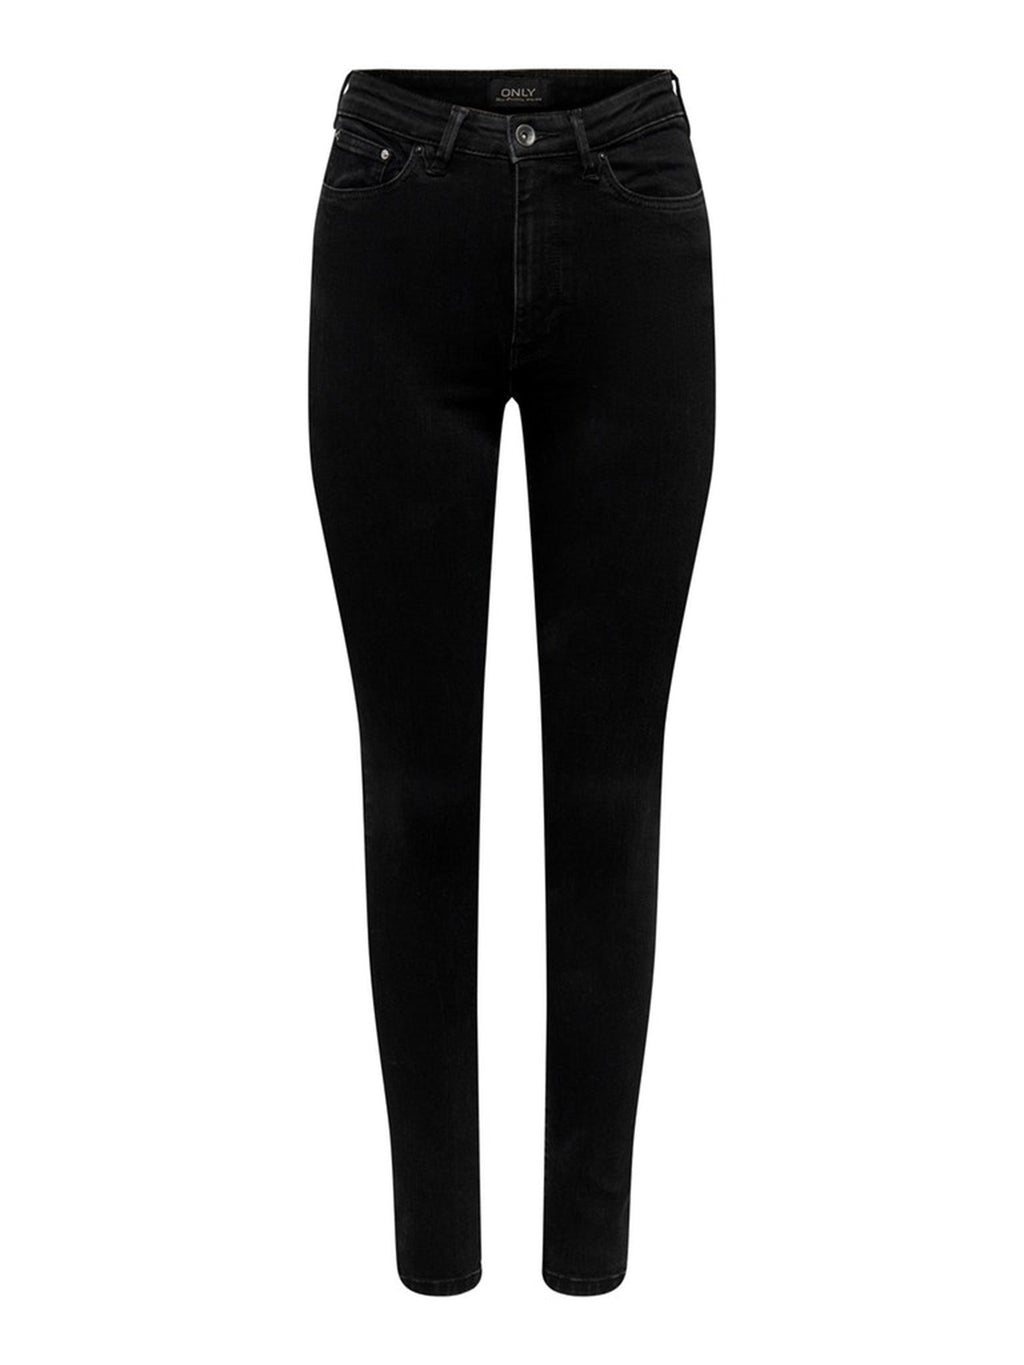 Iconic Highwaist Jeans - Black